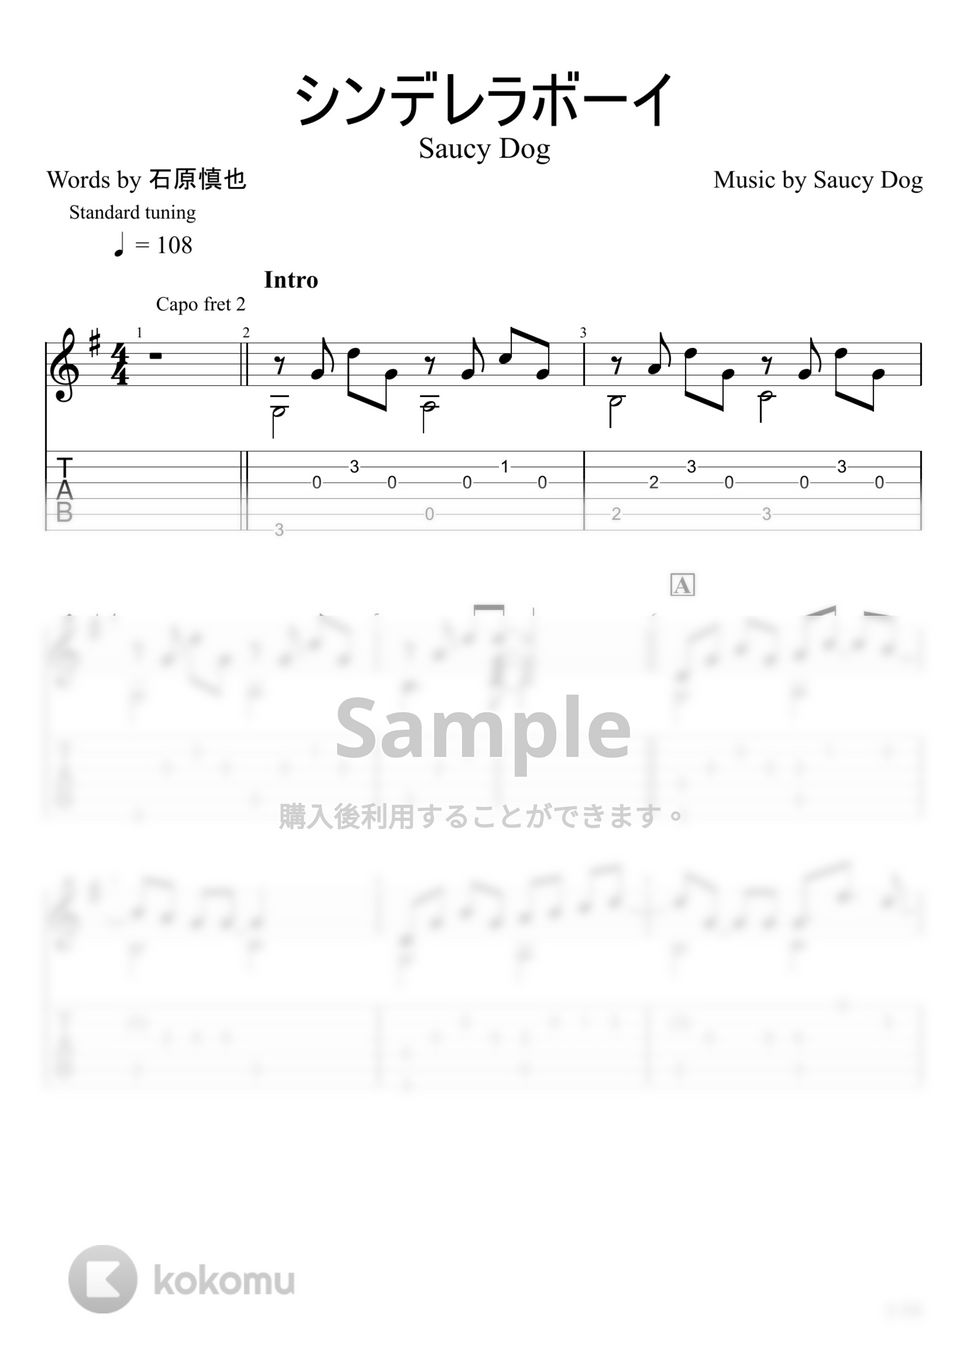 Saucy Dog - シンデレラボーイ (ソロギター) by u3danchou